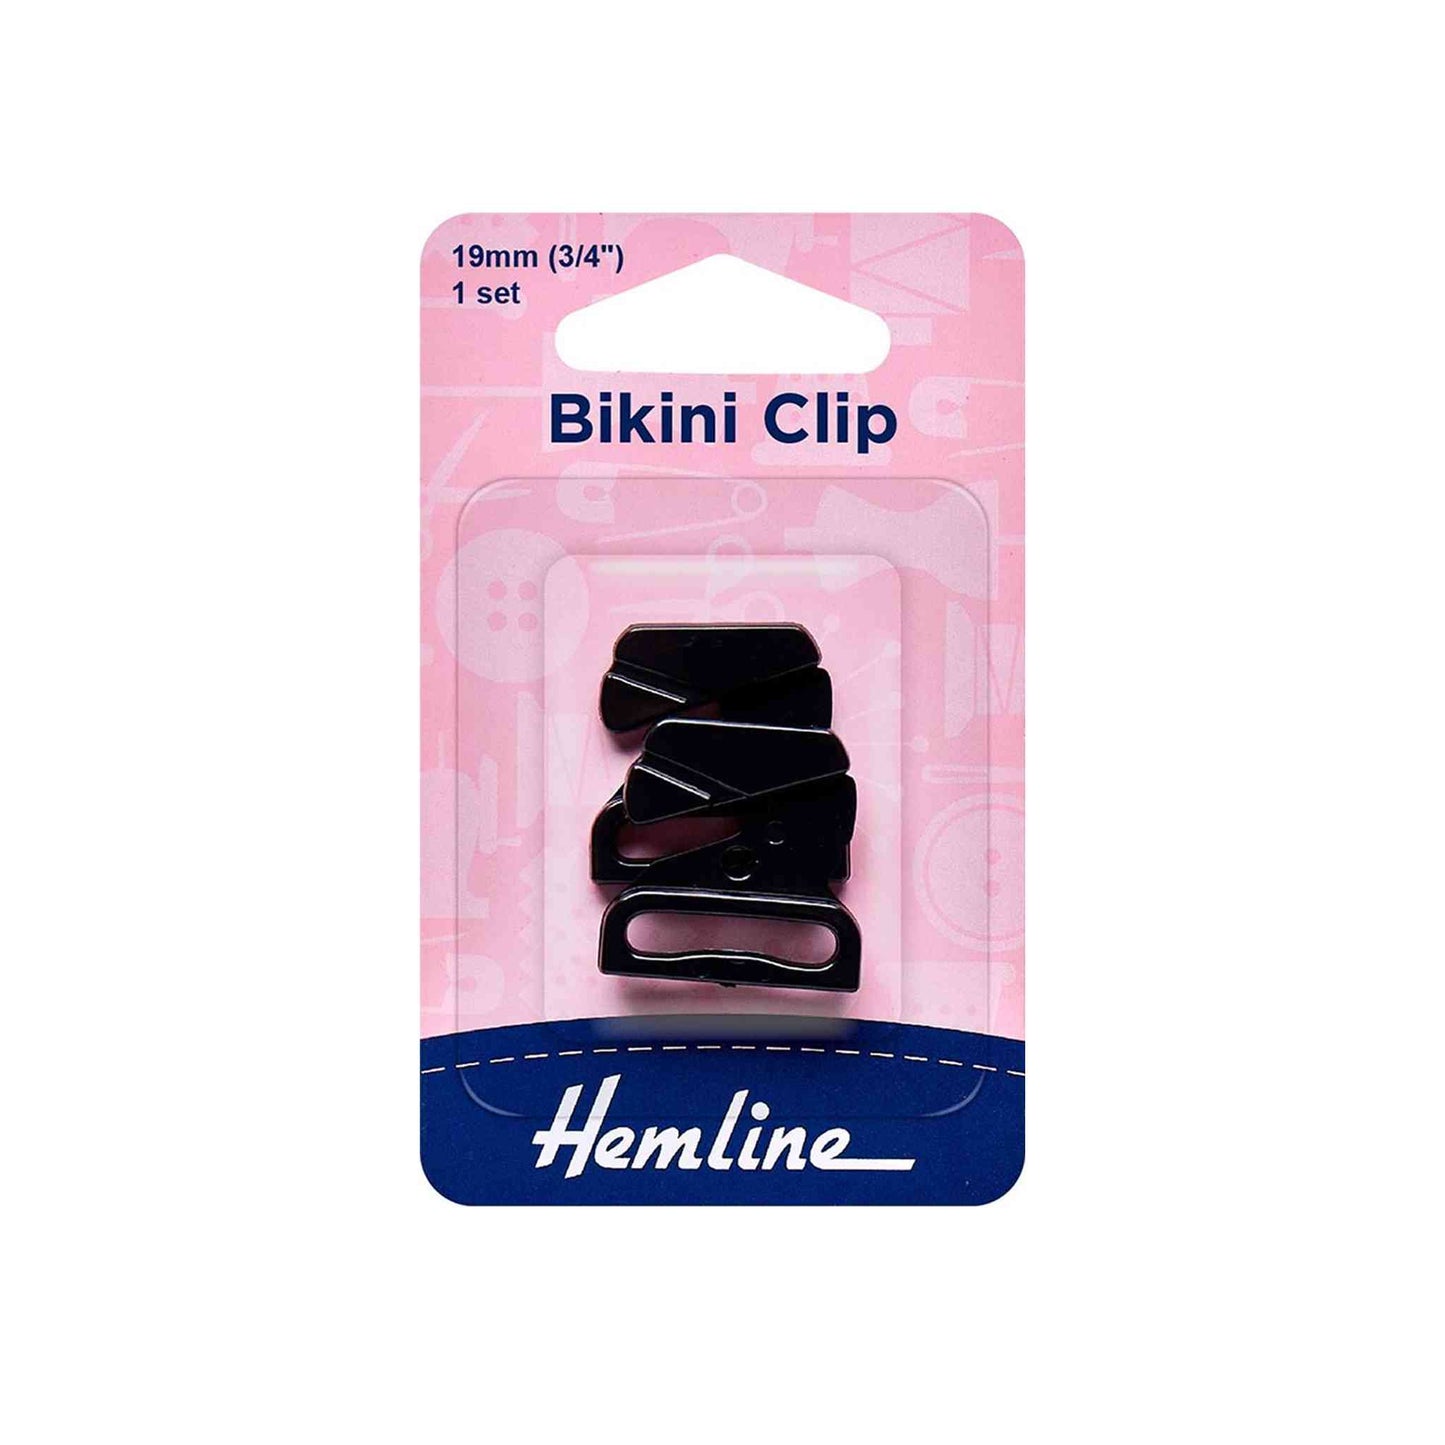 Hemline Bikini Buckle / Clip (Various Sizes and Colours)